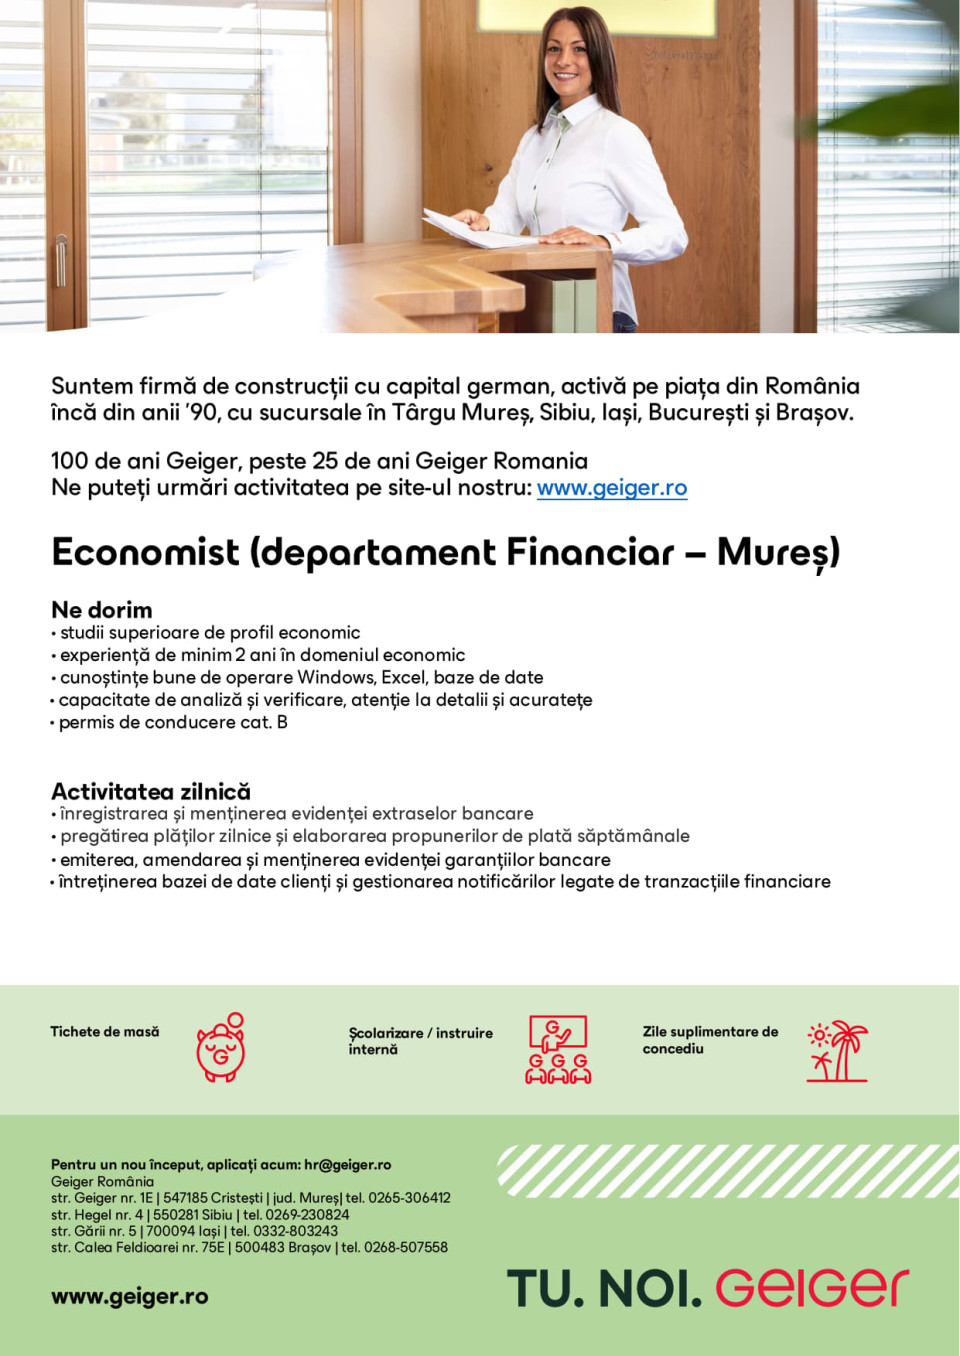 Economist (Financiar - Mures)